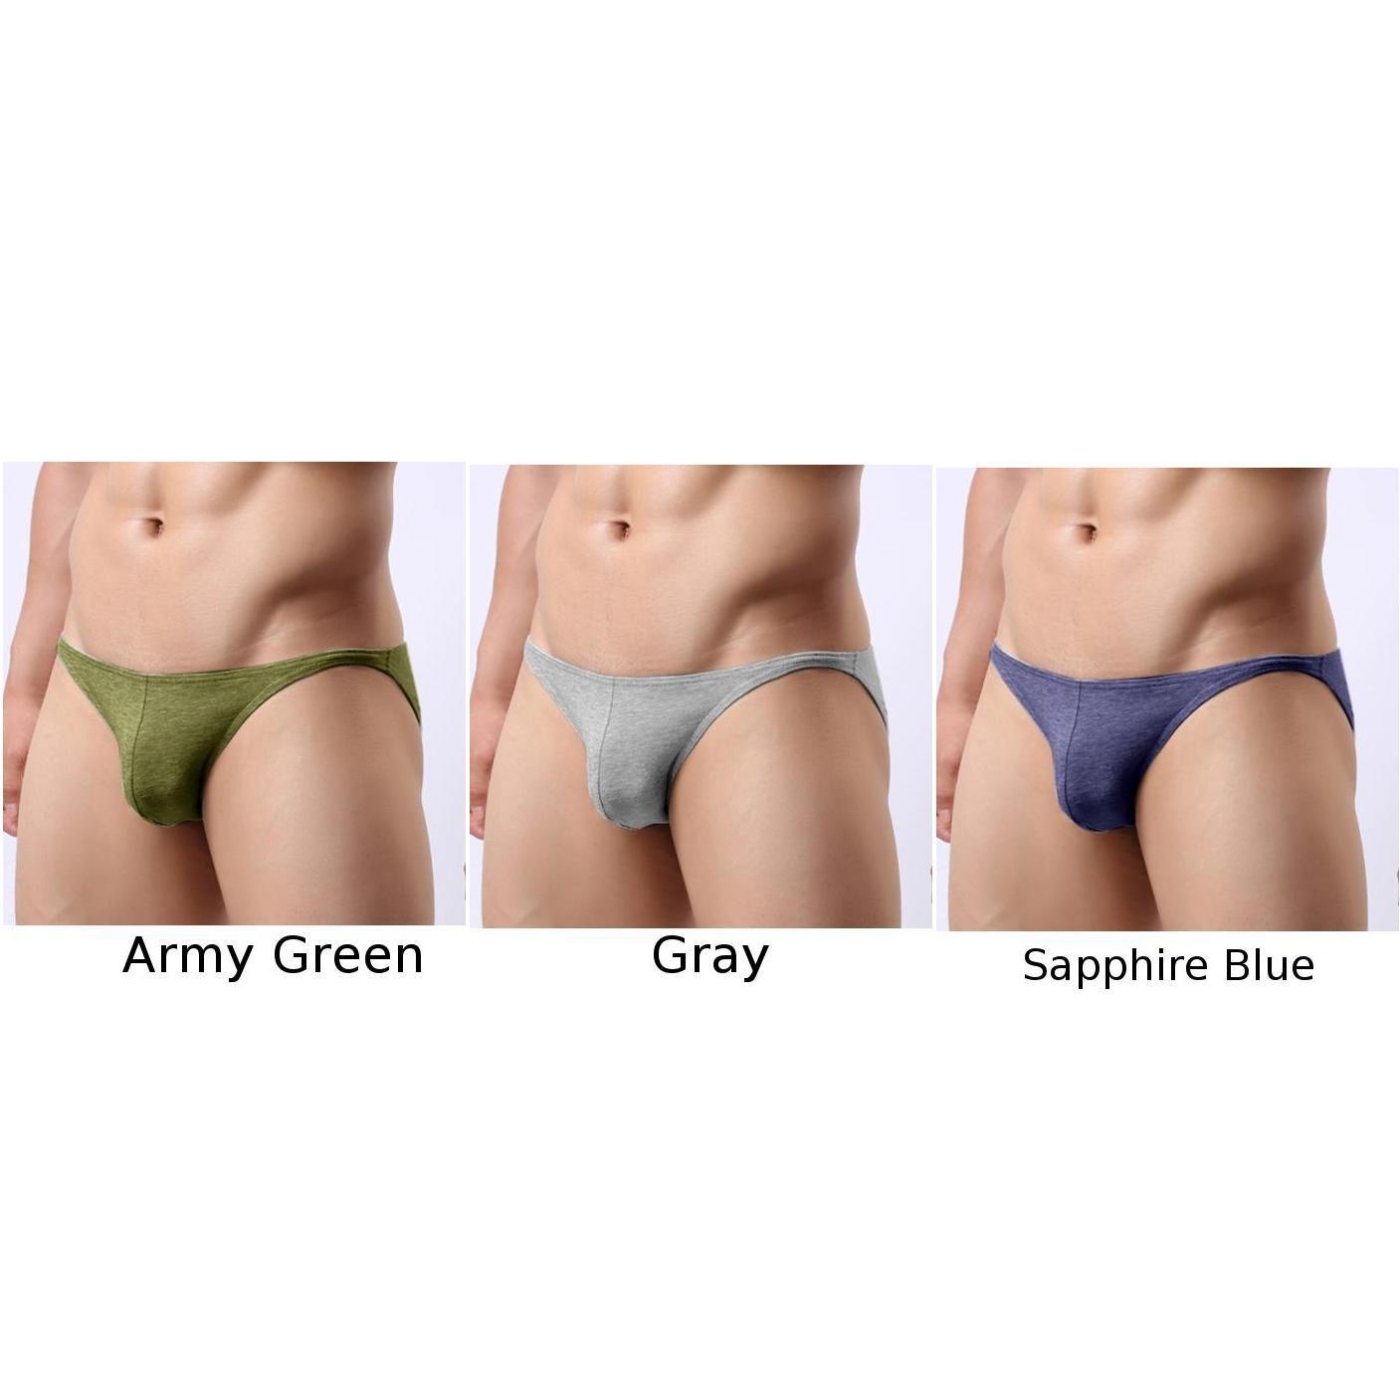 100% Cotton Men's Sexy Cotton Underwear Briefs Breathable Thong Lingerie Stretch Underpants Sexy Men's Briefs